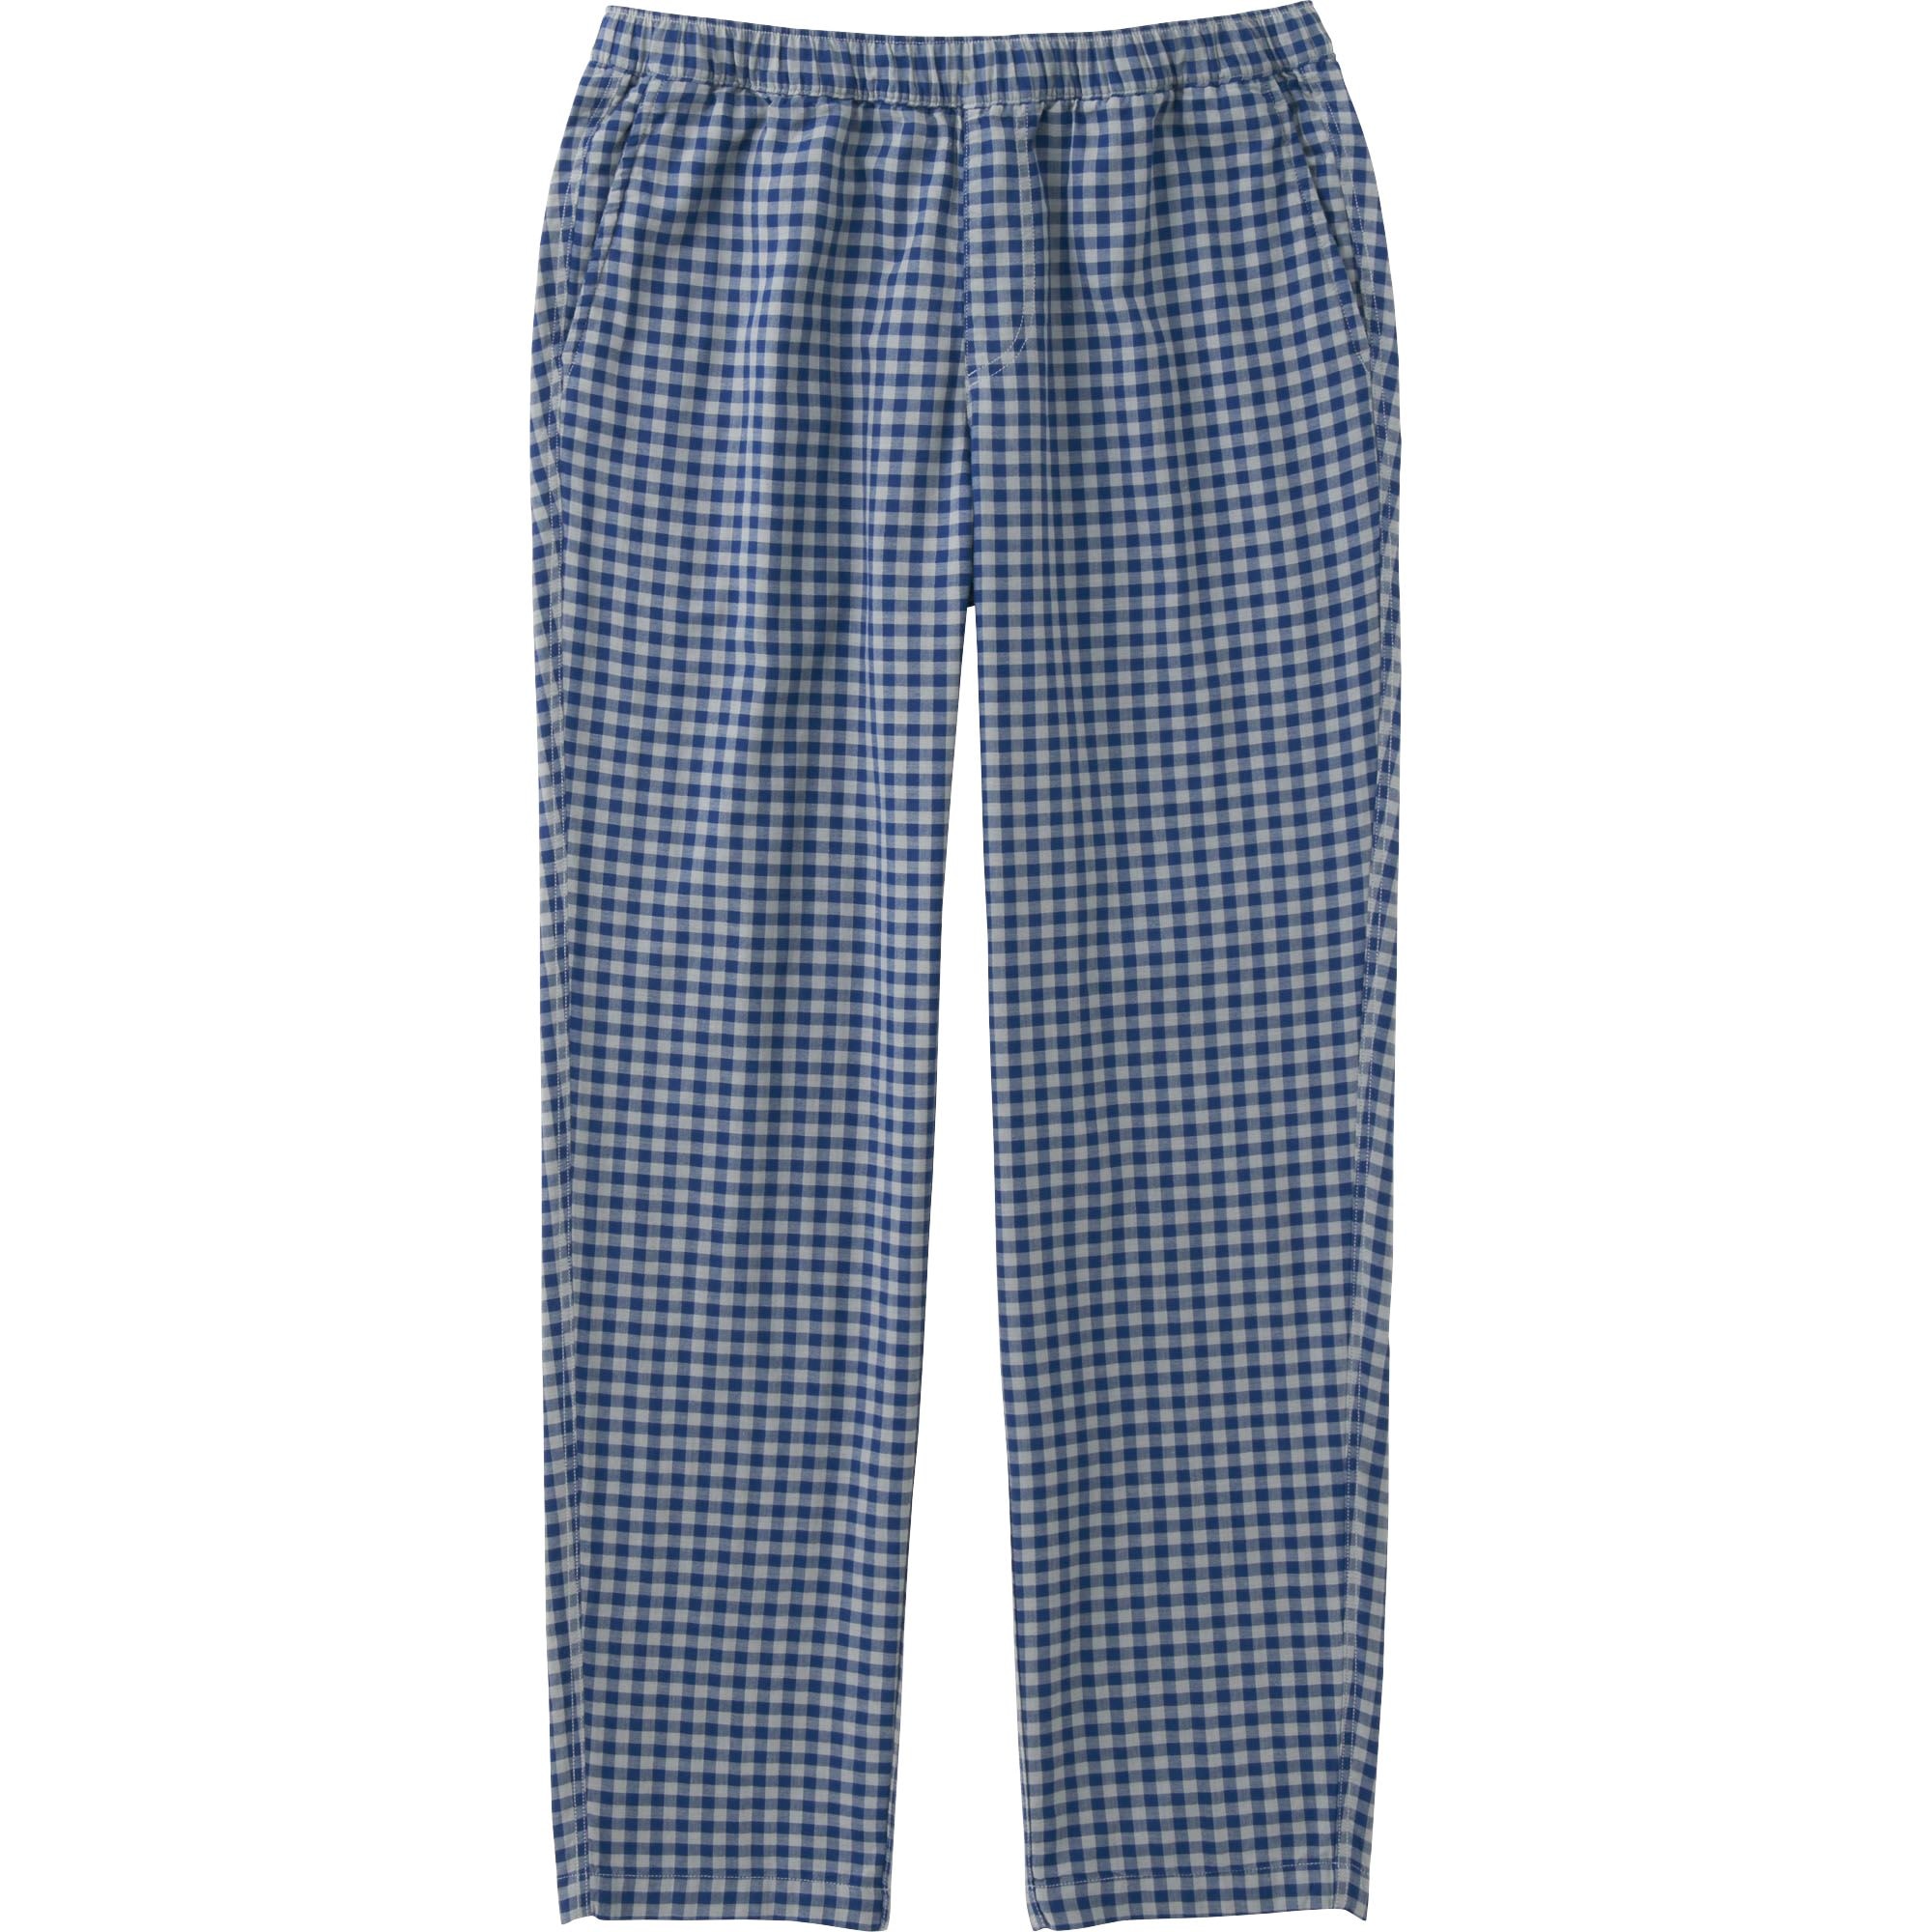 cotton pajama pants